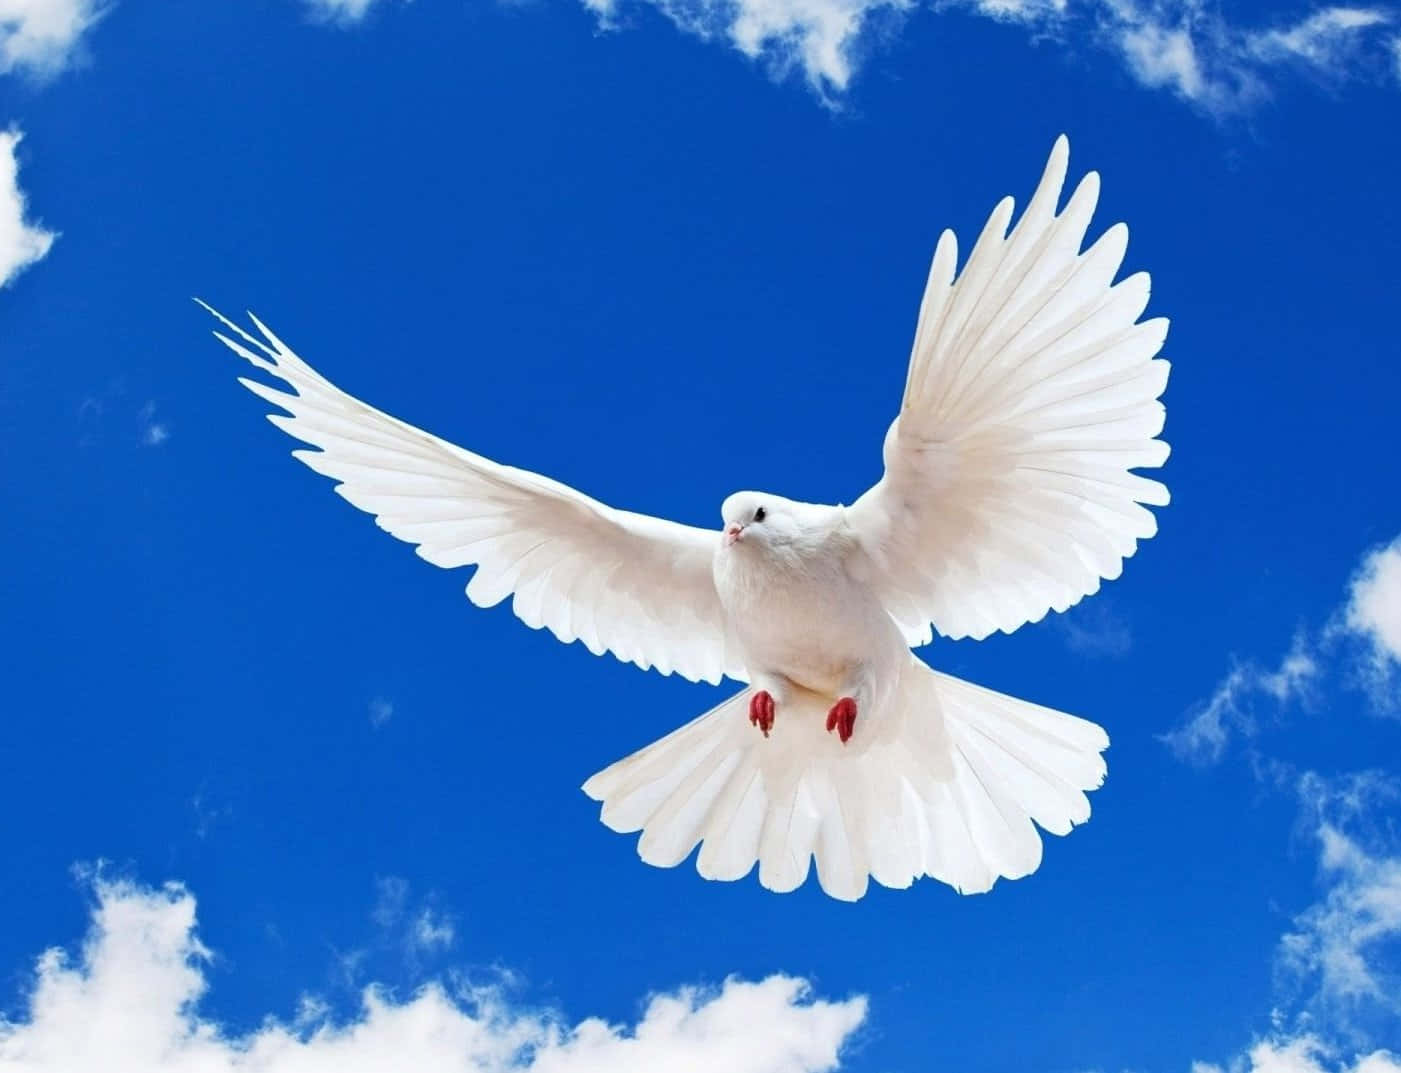 White Dove Flying In The Blue Sky